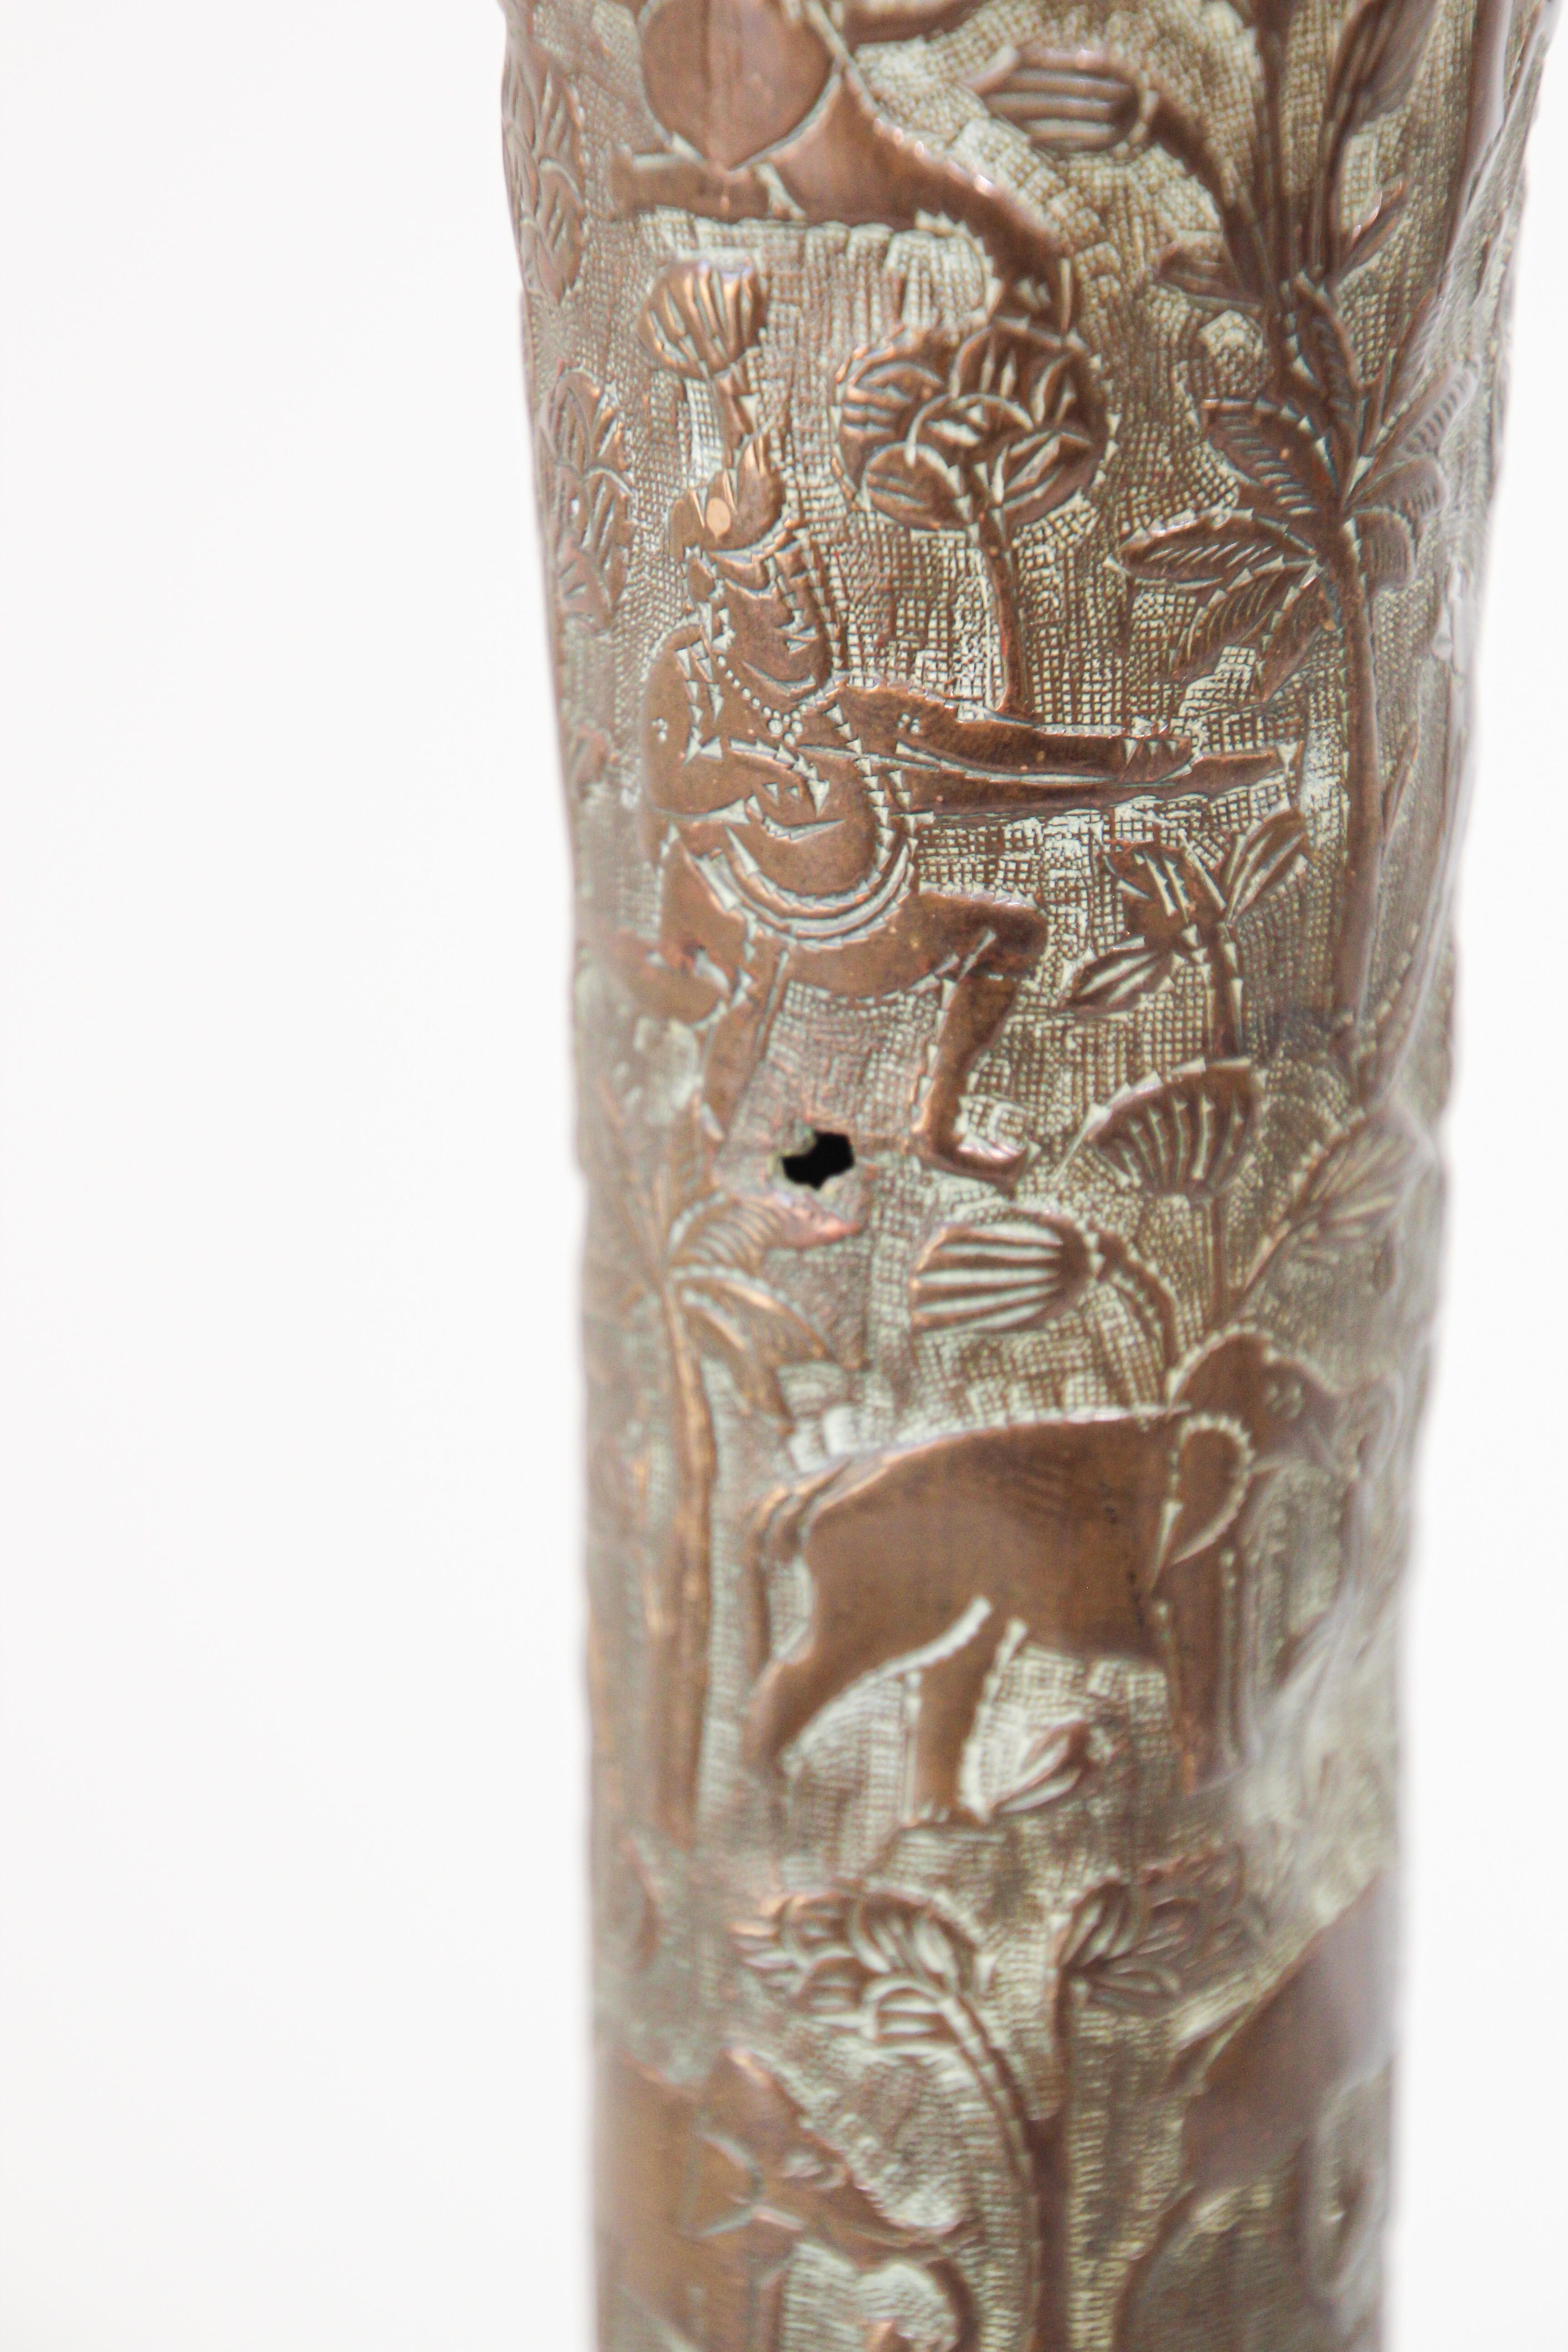 Antique Copper Vase with Hindu Scenes, 19th Century For Sale 2